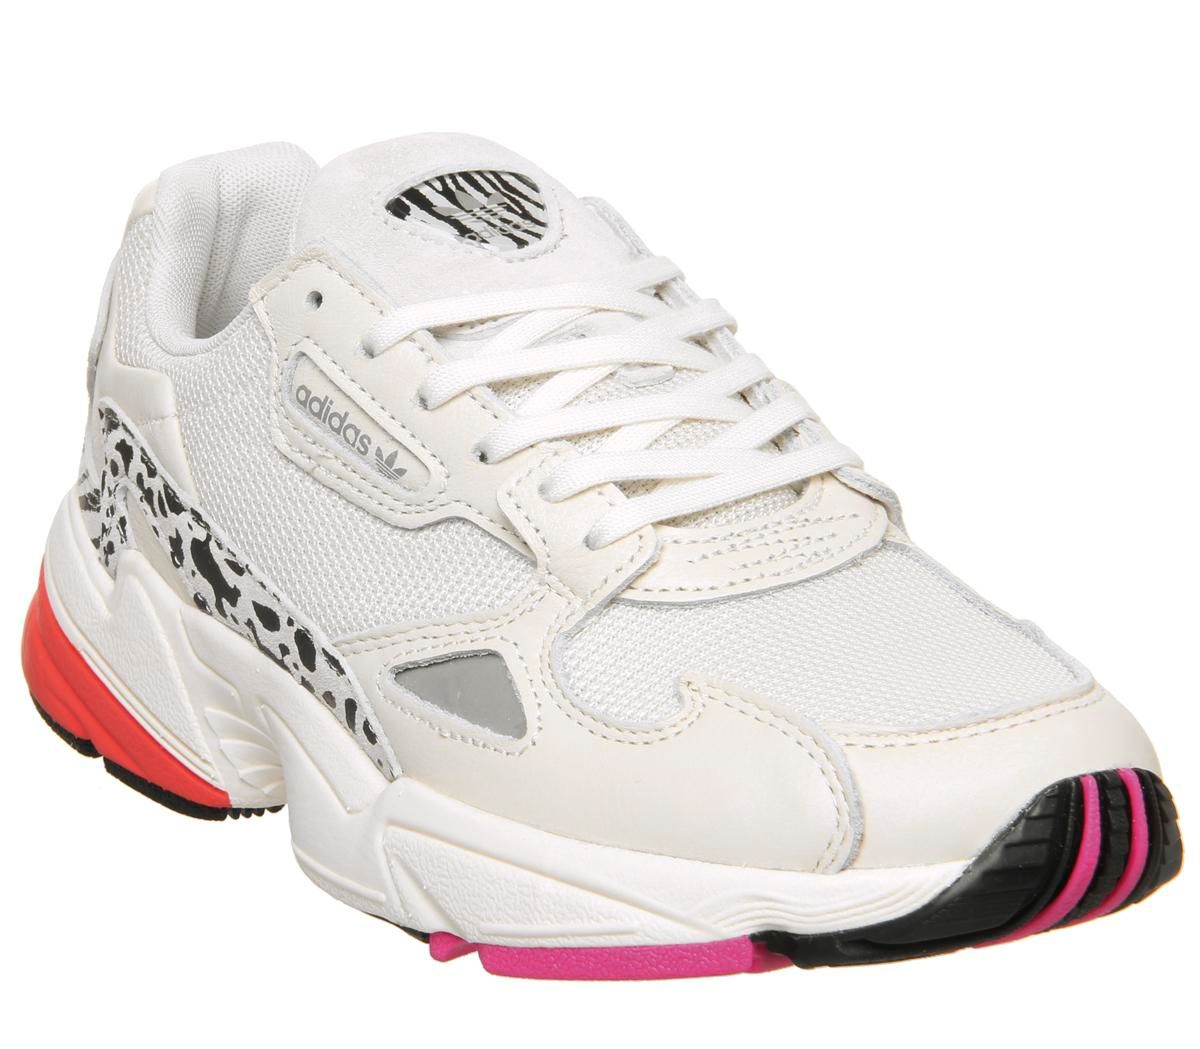 adidas falcon off white core black shock pink